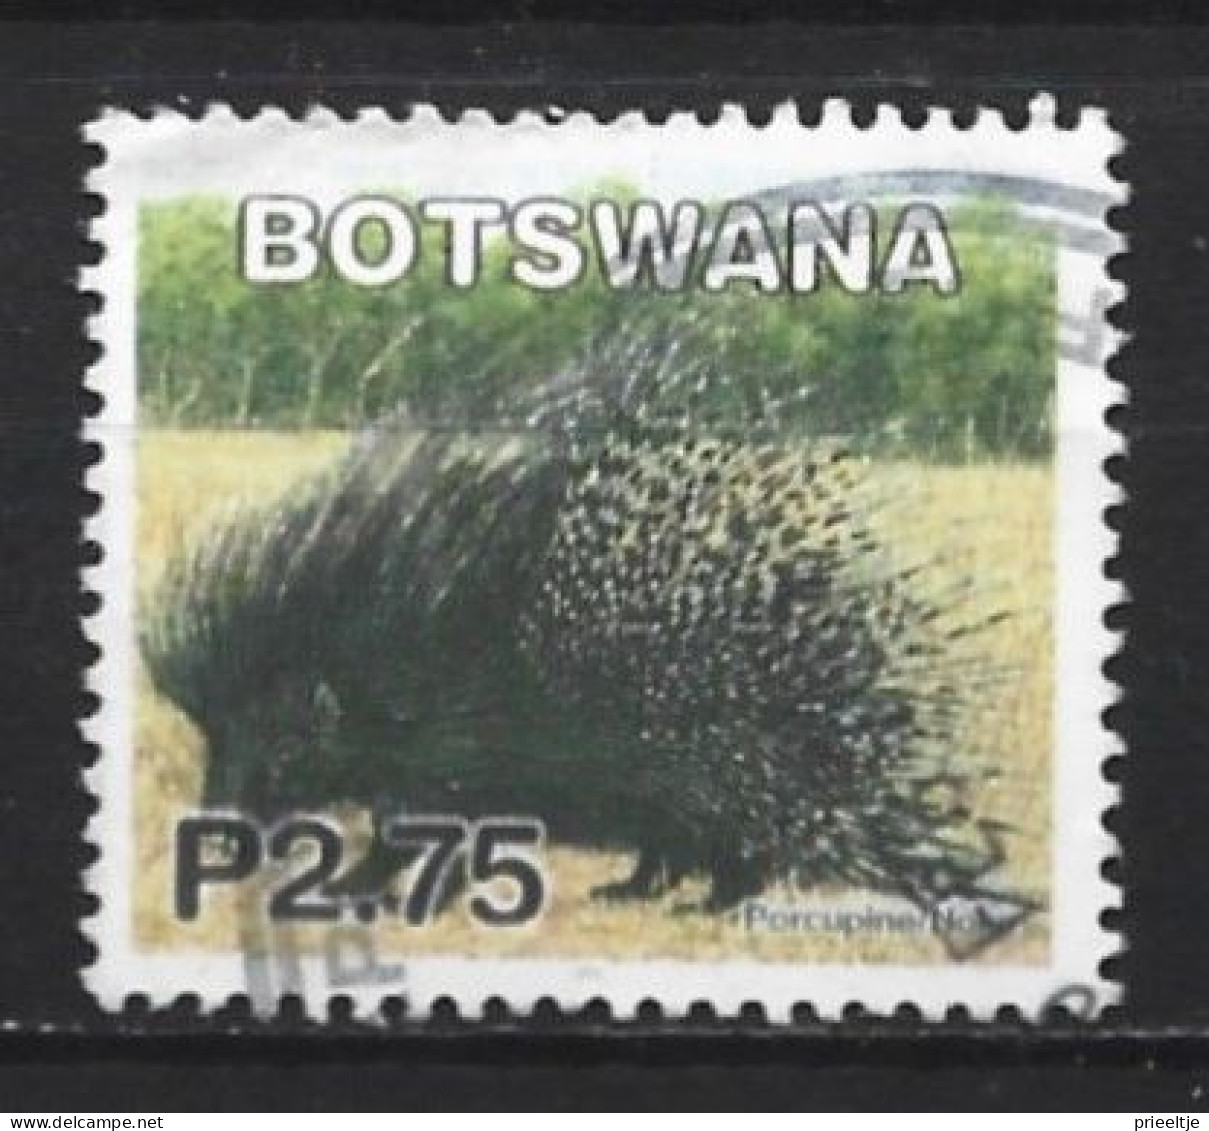 Botswana 2002 Fauna Y.T. 892 (0) - Botswana (1966-...)